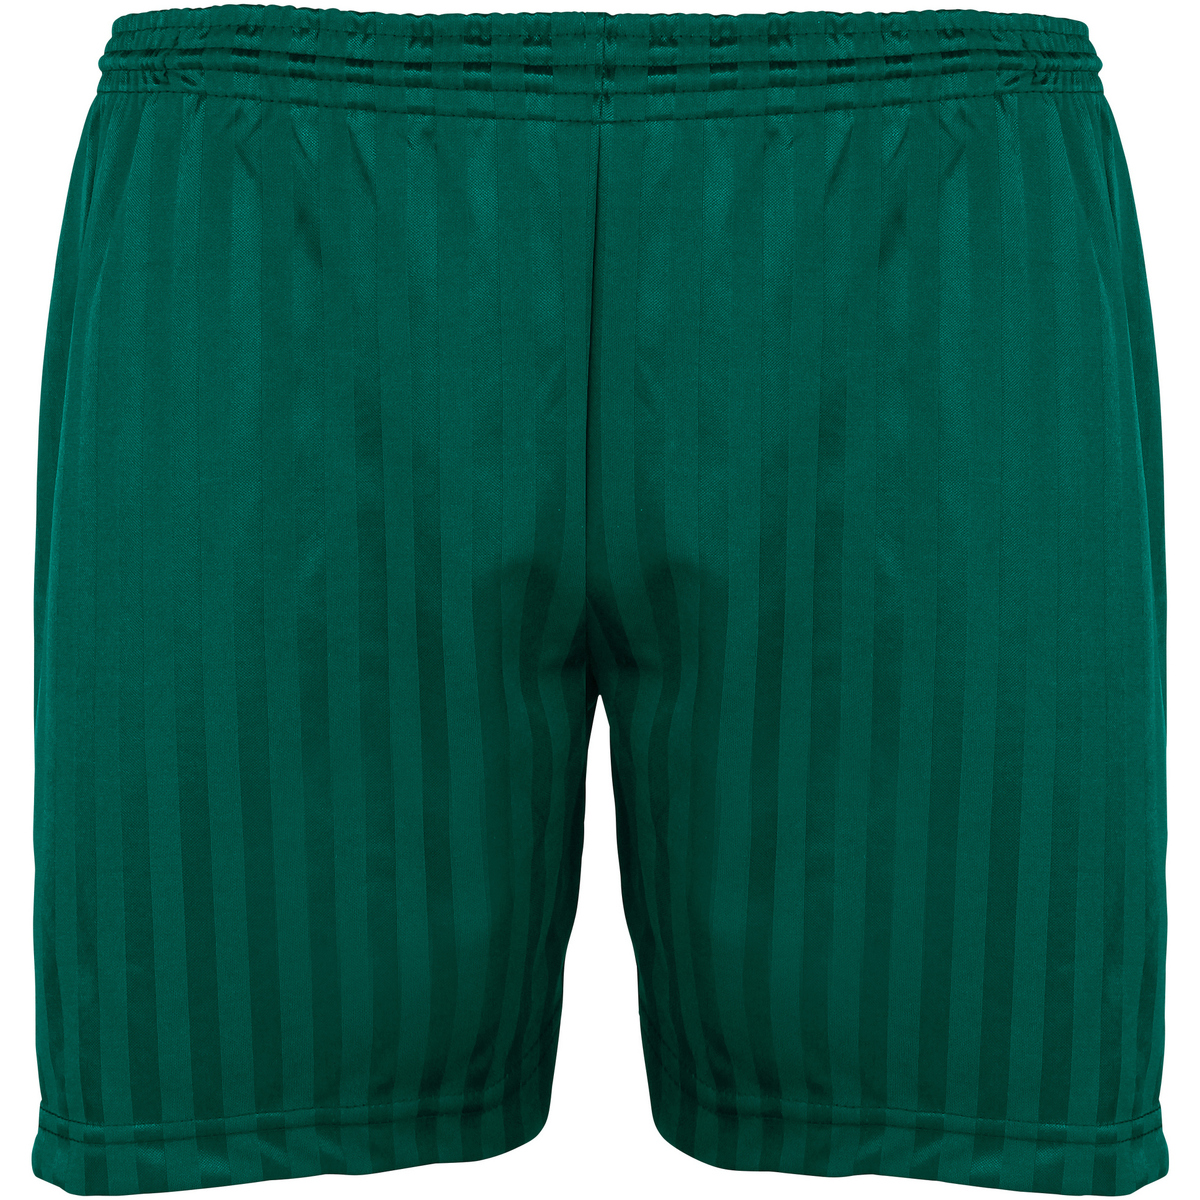 textil Niños Shorts / Bermudas Maddins MD15B Verde